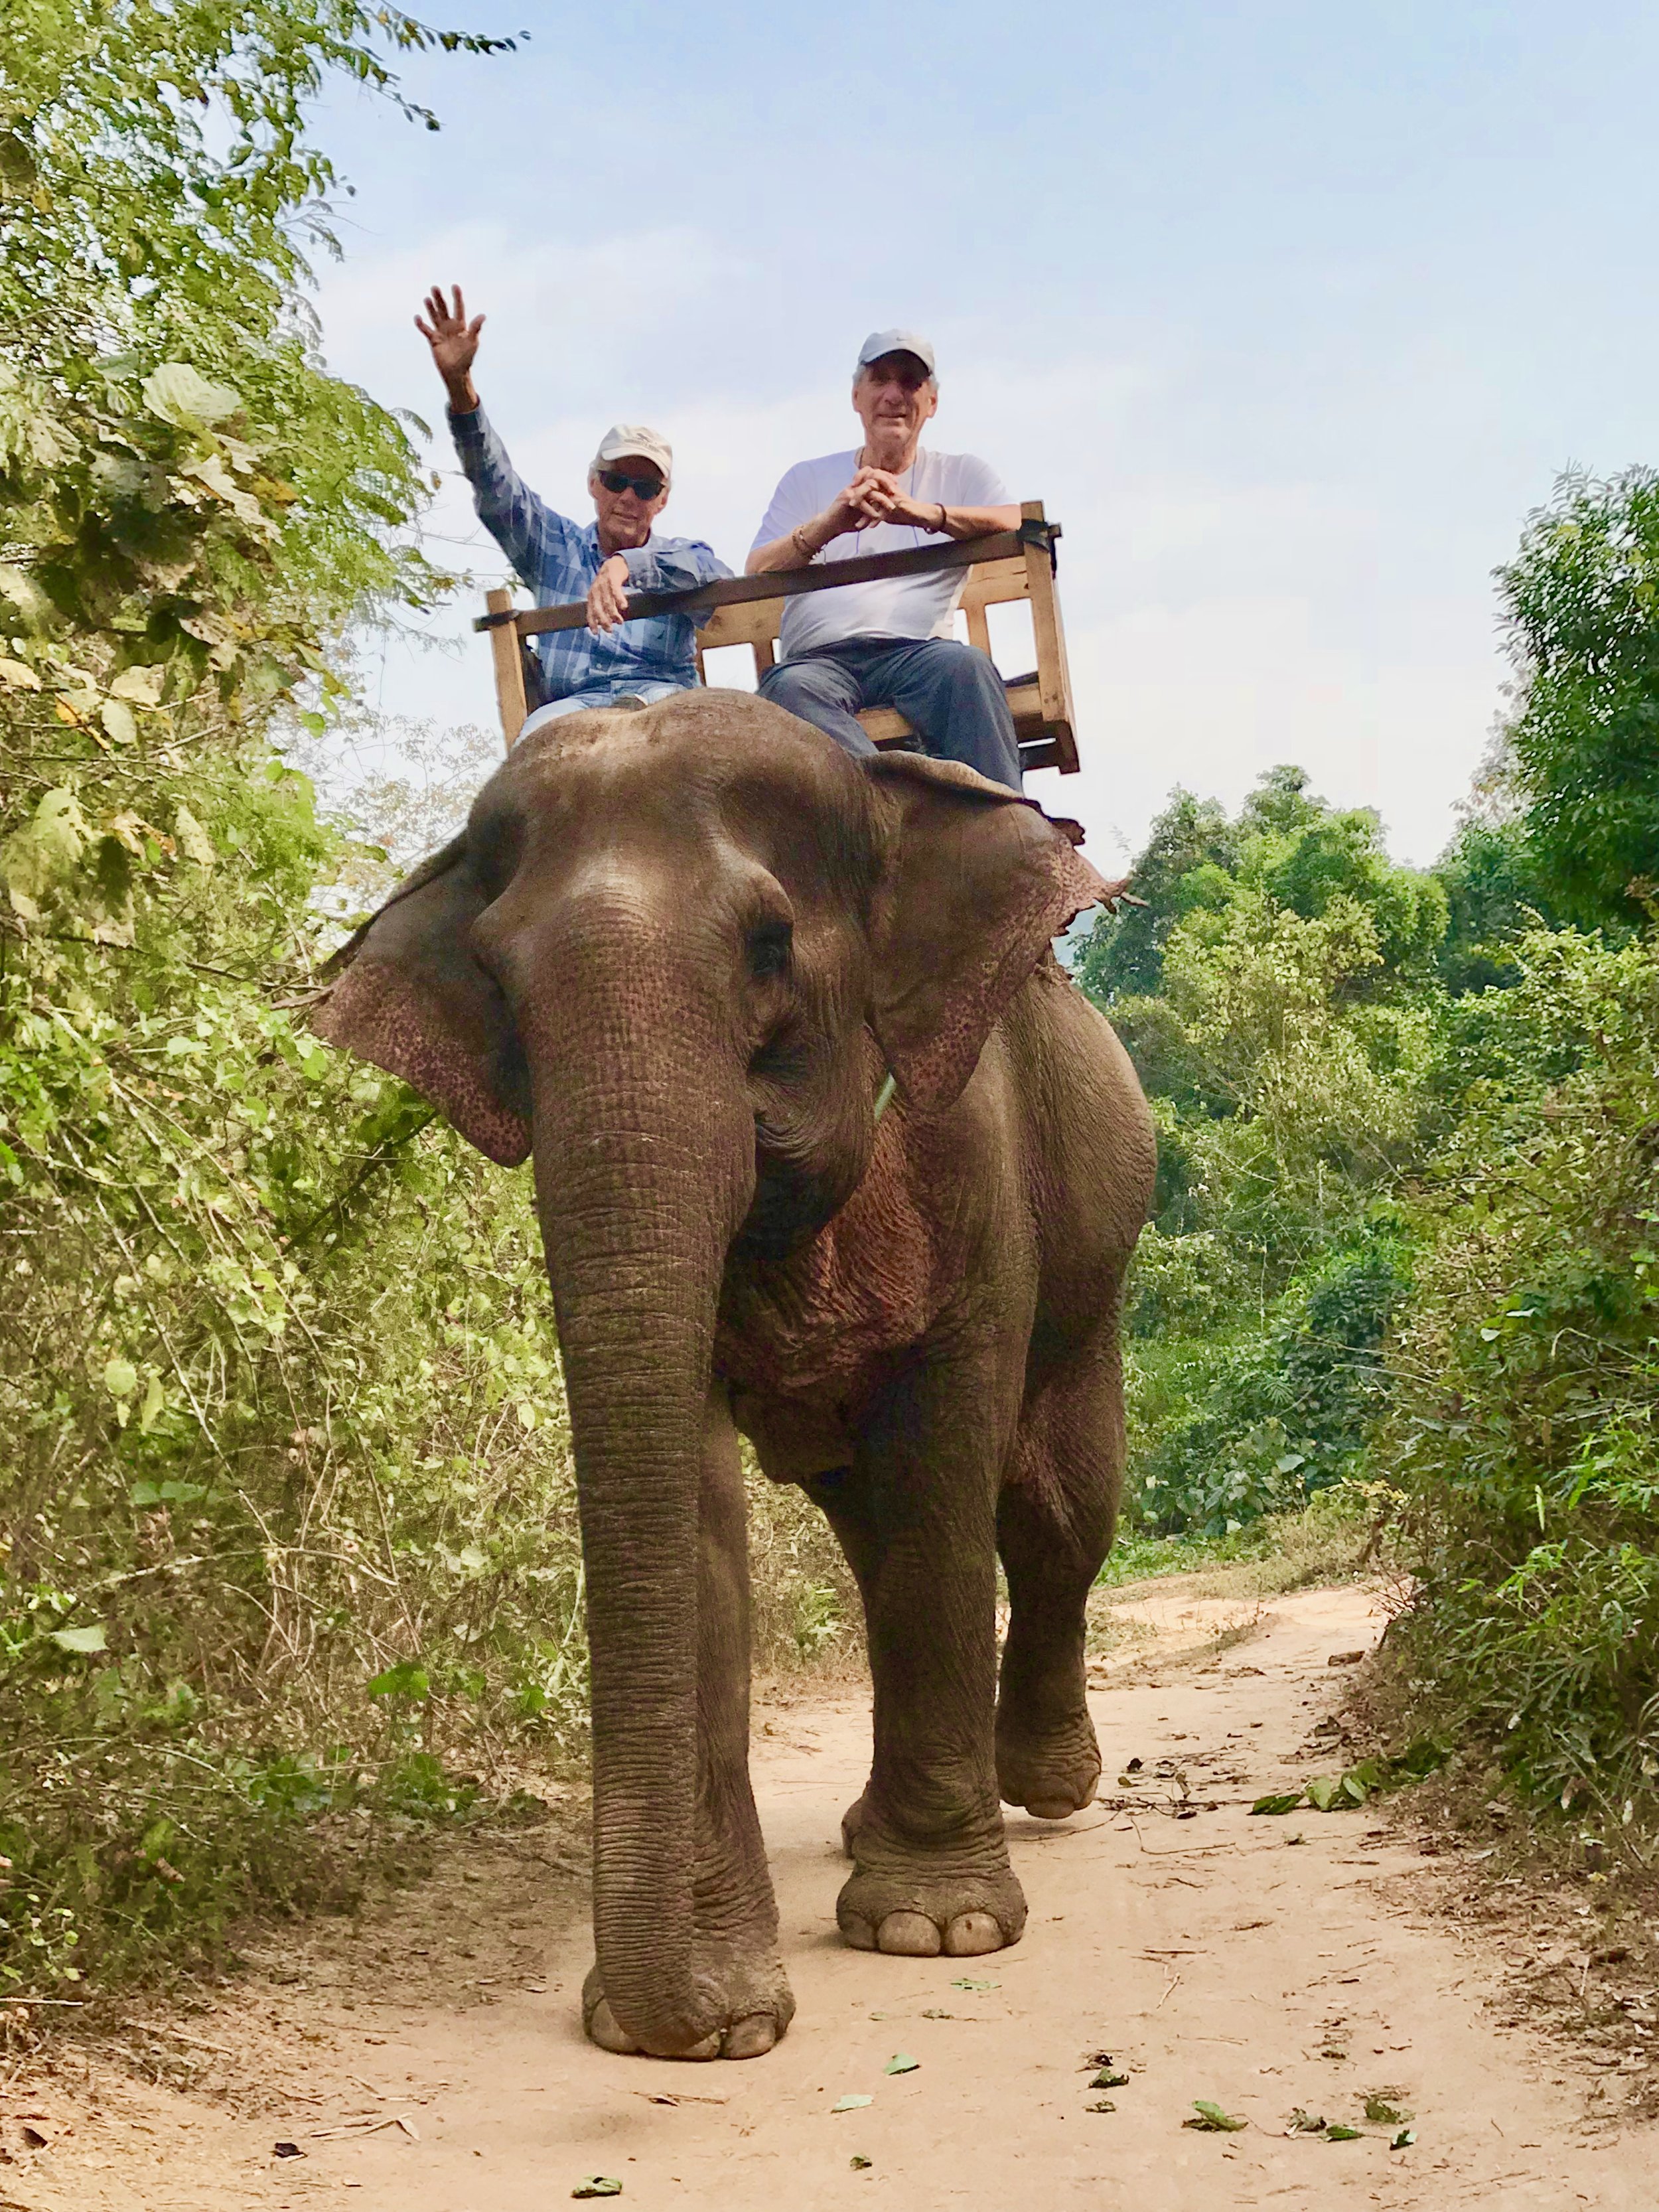 Ed waiving & Me on elephant.jpg*.jpg